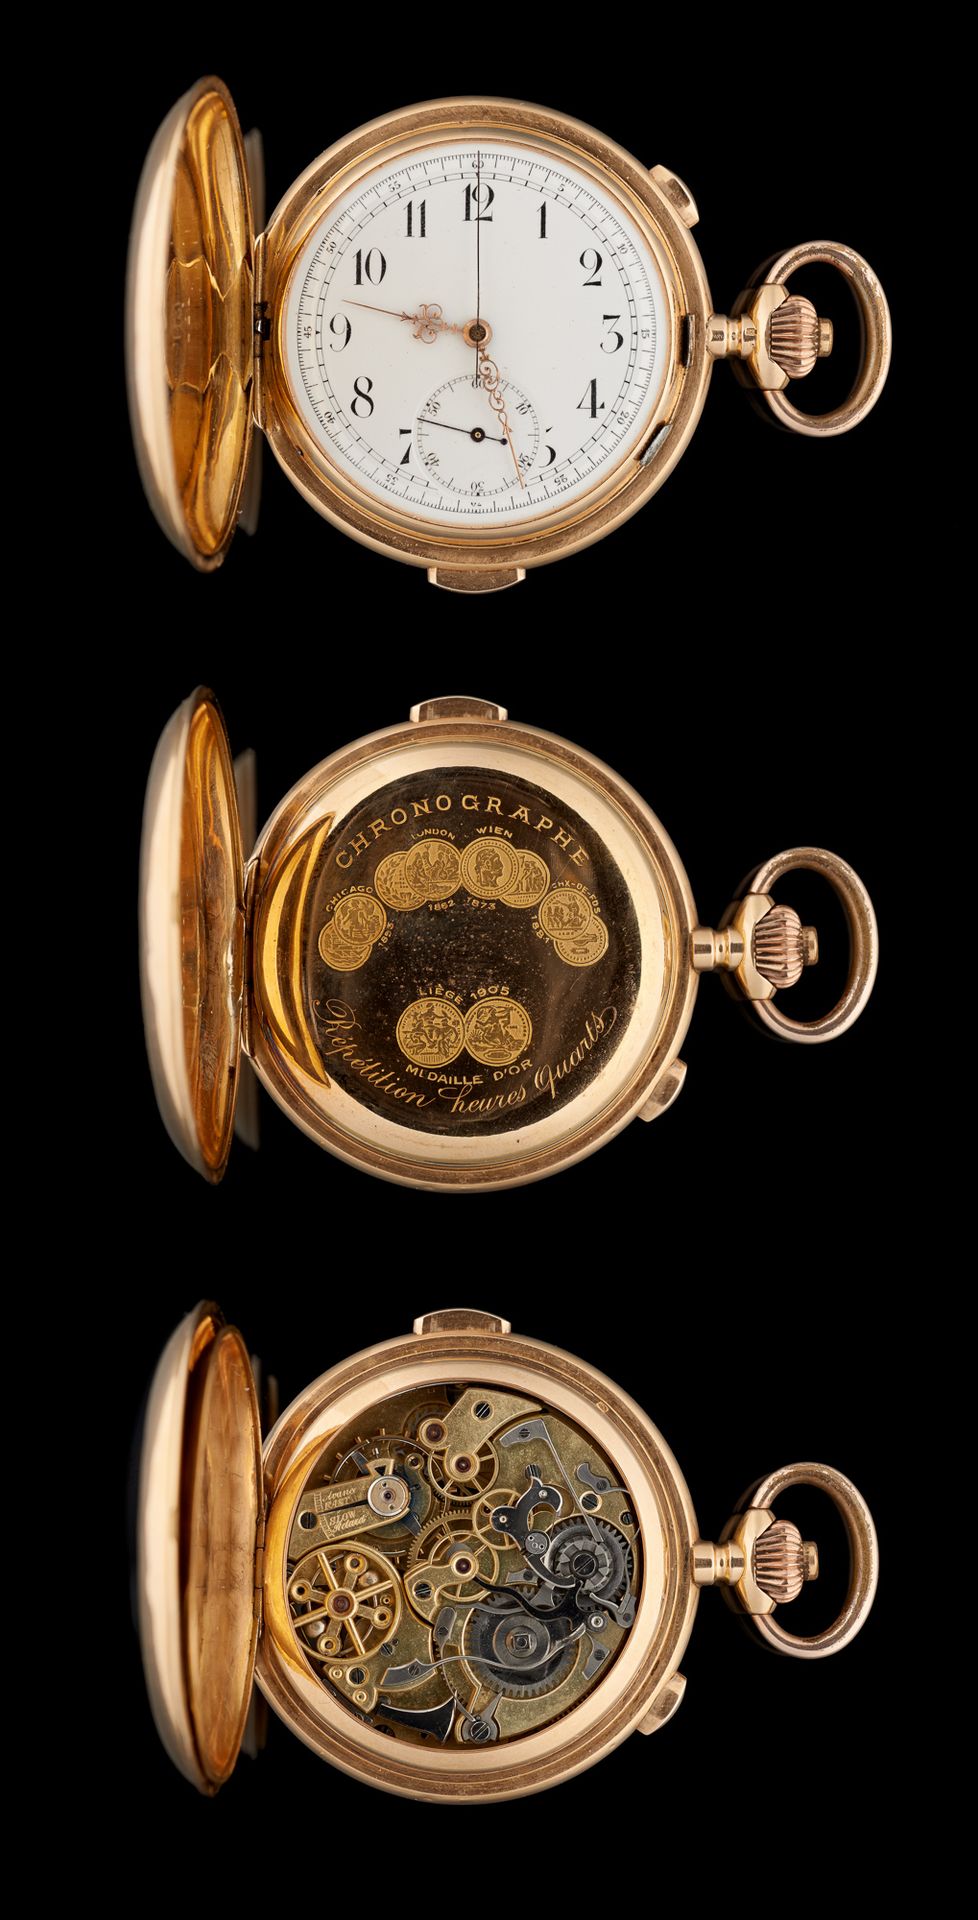 Circa 1900. 手表：18K金怀表，计时码表，小时和刻钟报时。

尺寸：表盘直径4厘米。